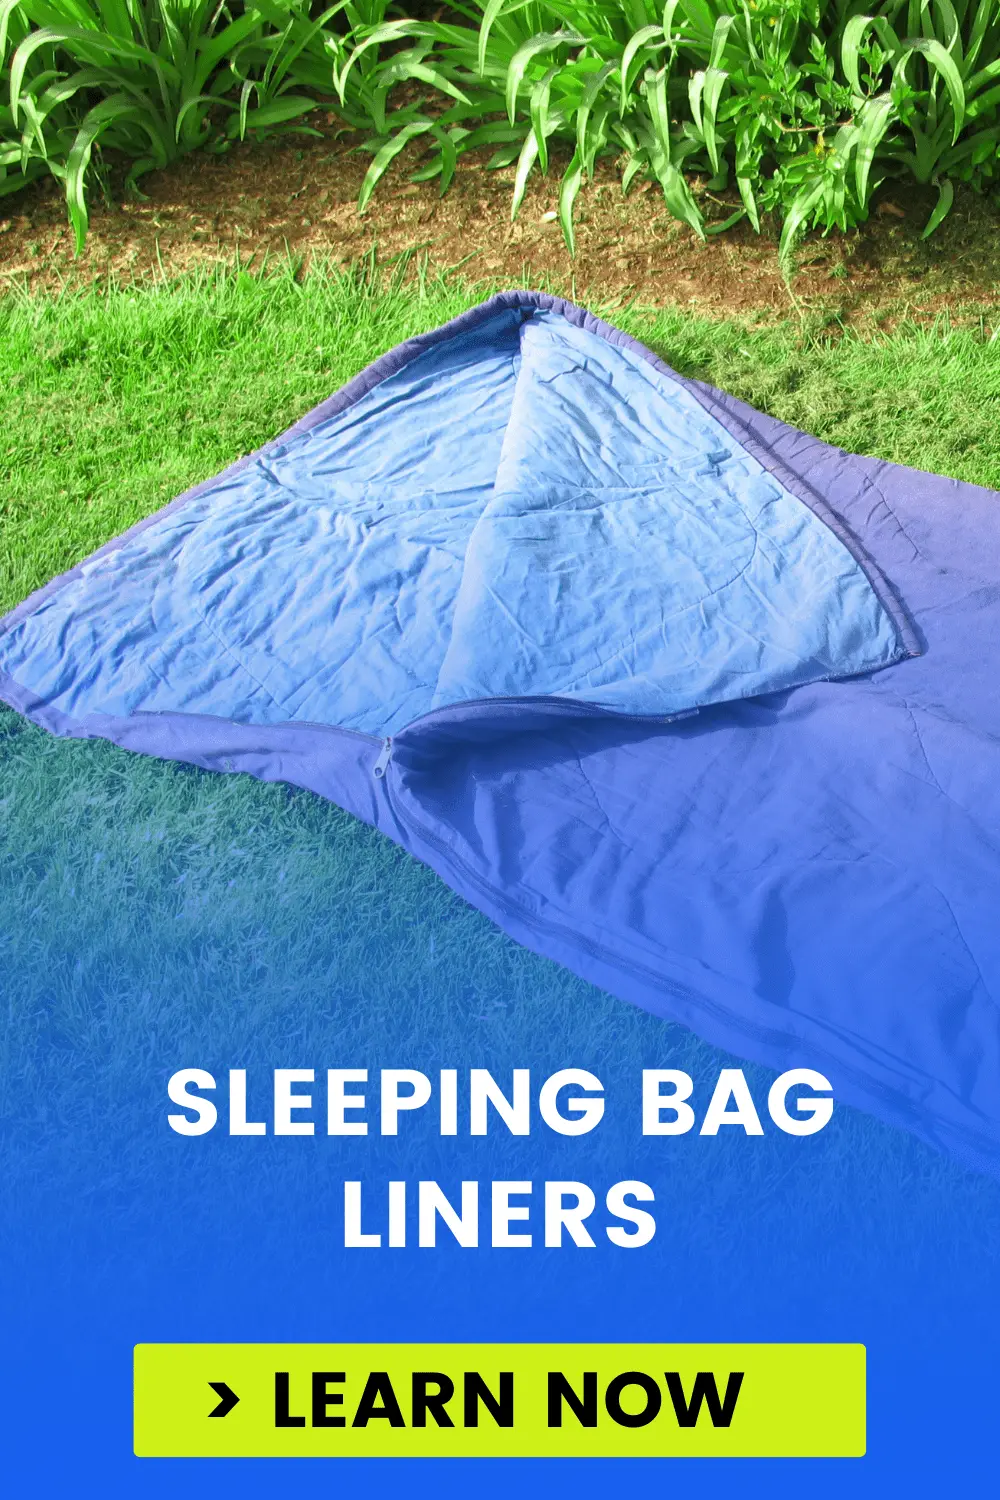 Sleeping Bag liners